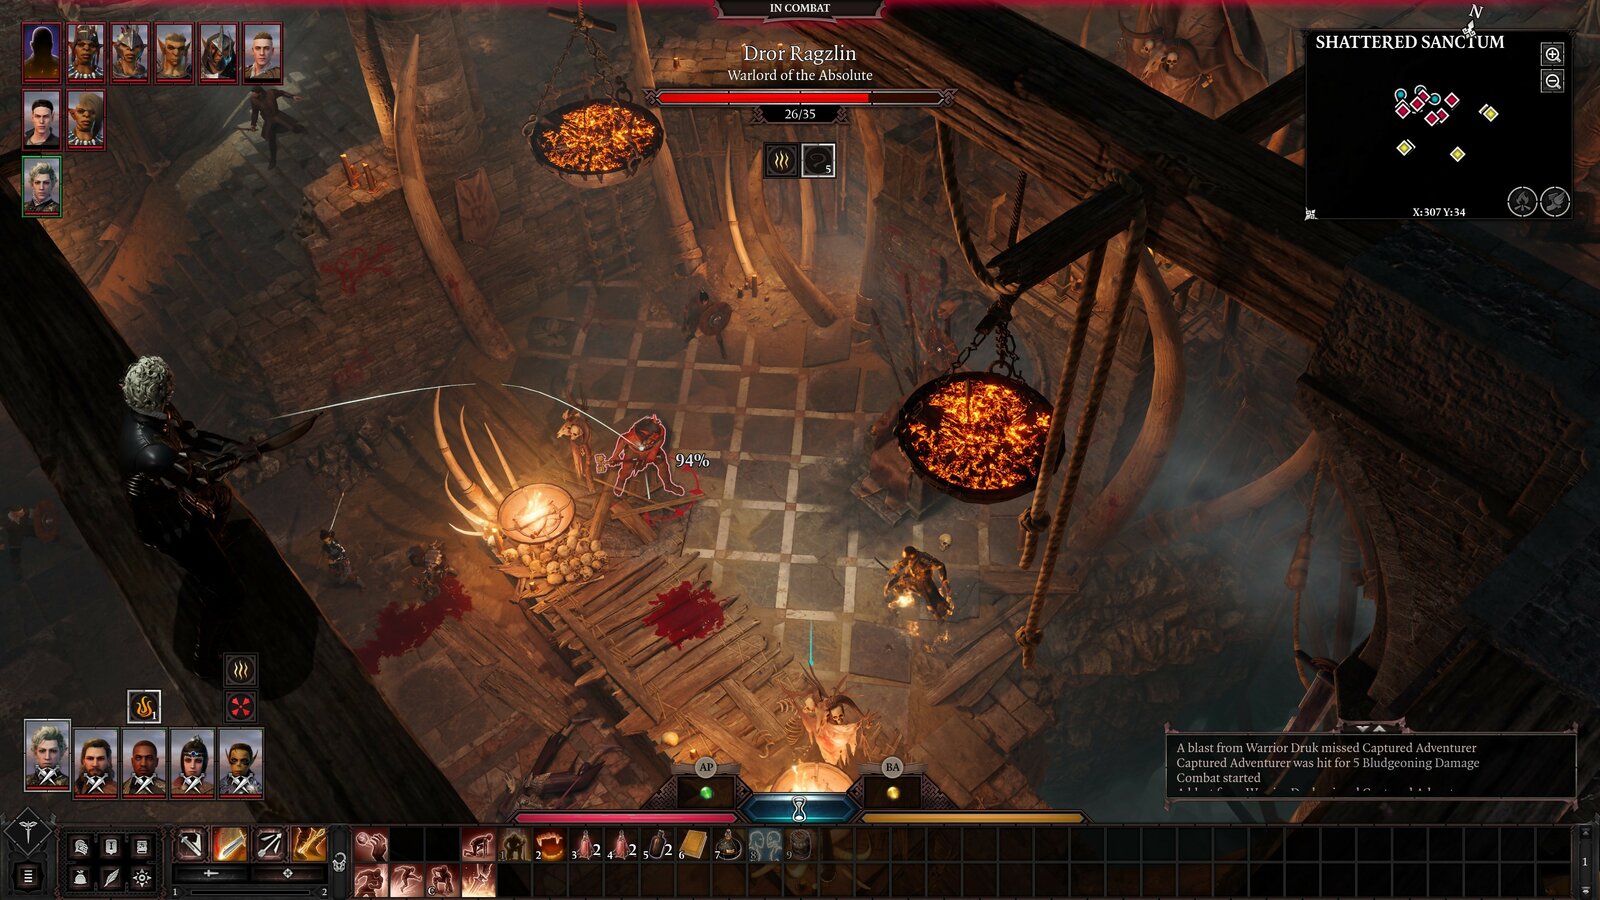 Baldur's Gate III - Digital Deluxe Edition DLC